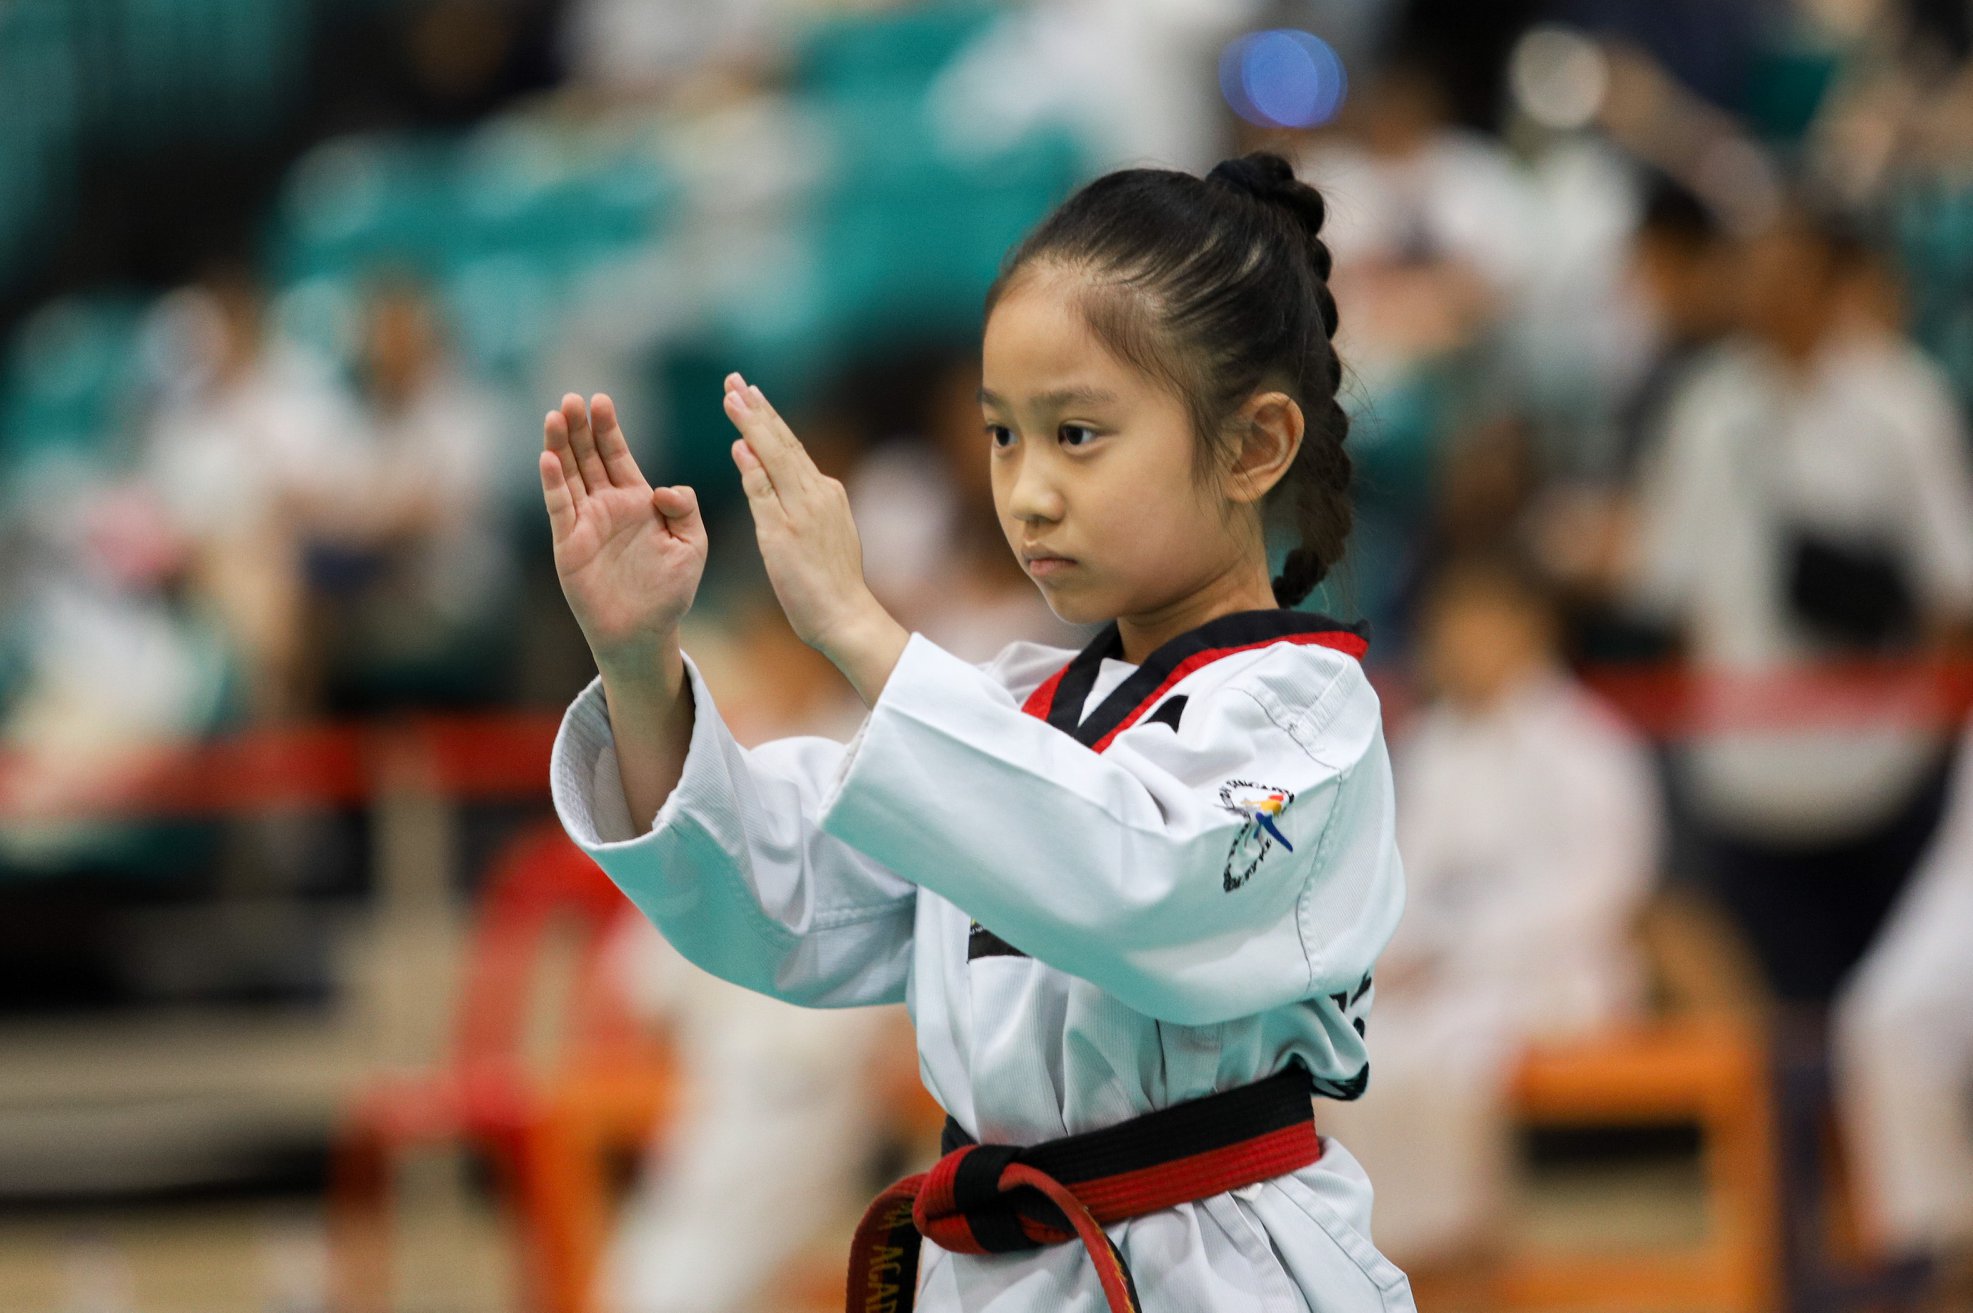 Taekwondo Lessons for Tiny Tots, Junior Kids and Kids